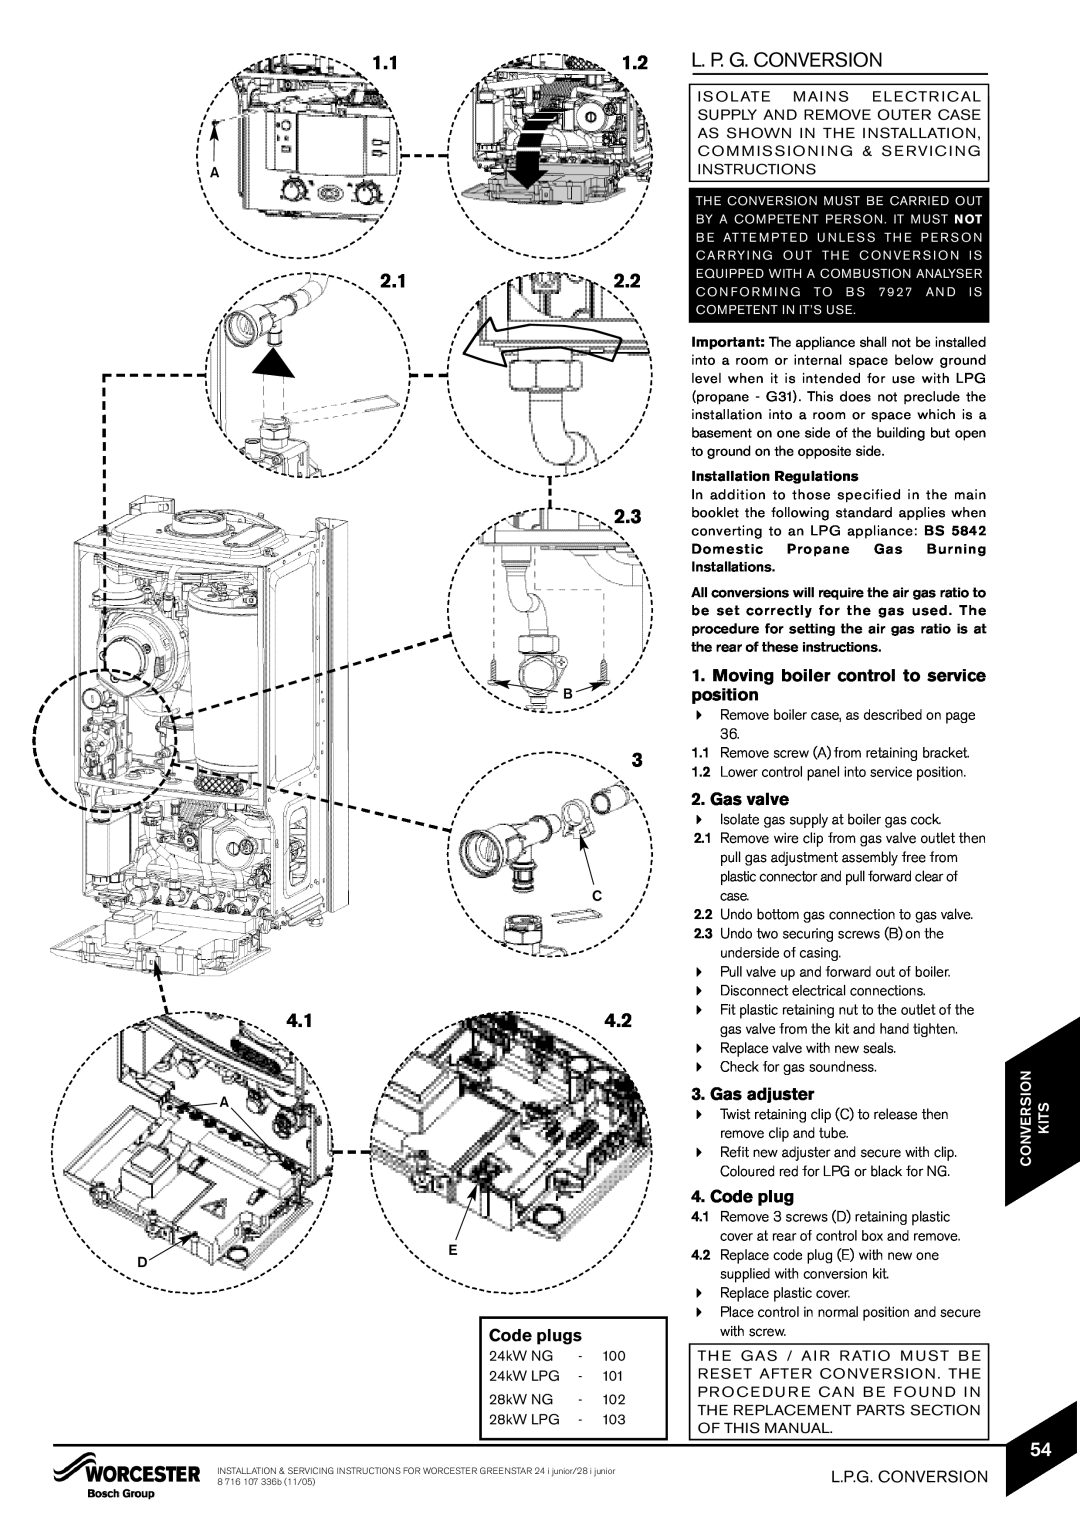 Bosch Appliances 24i junior manual L. P. G. Conversion, Moving boiler control to service position, Gas valve, Code plugs 